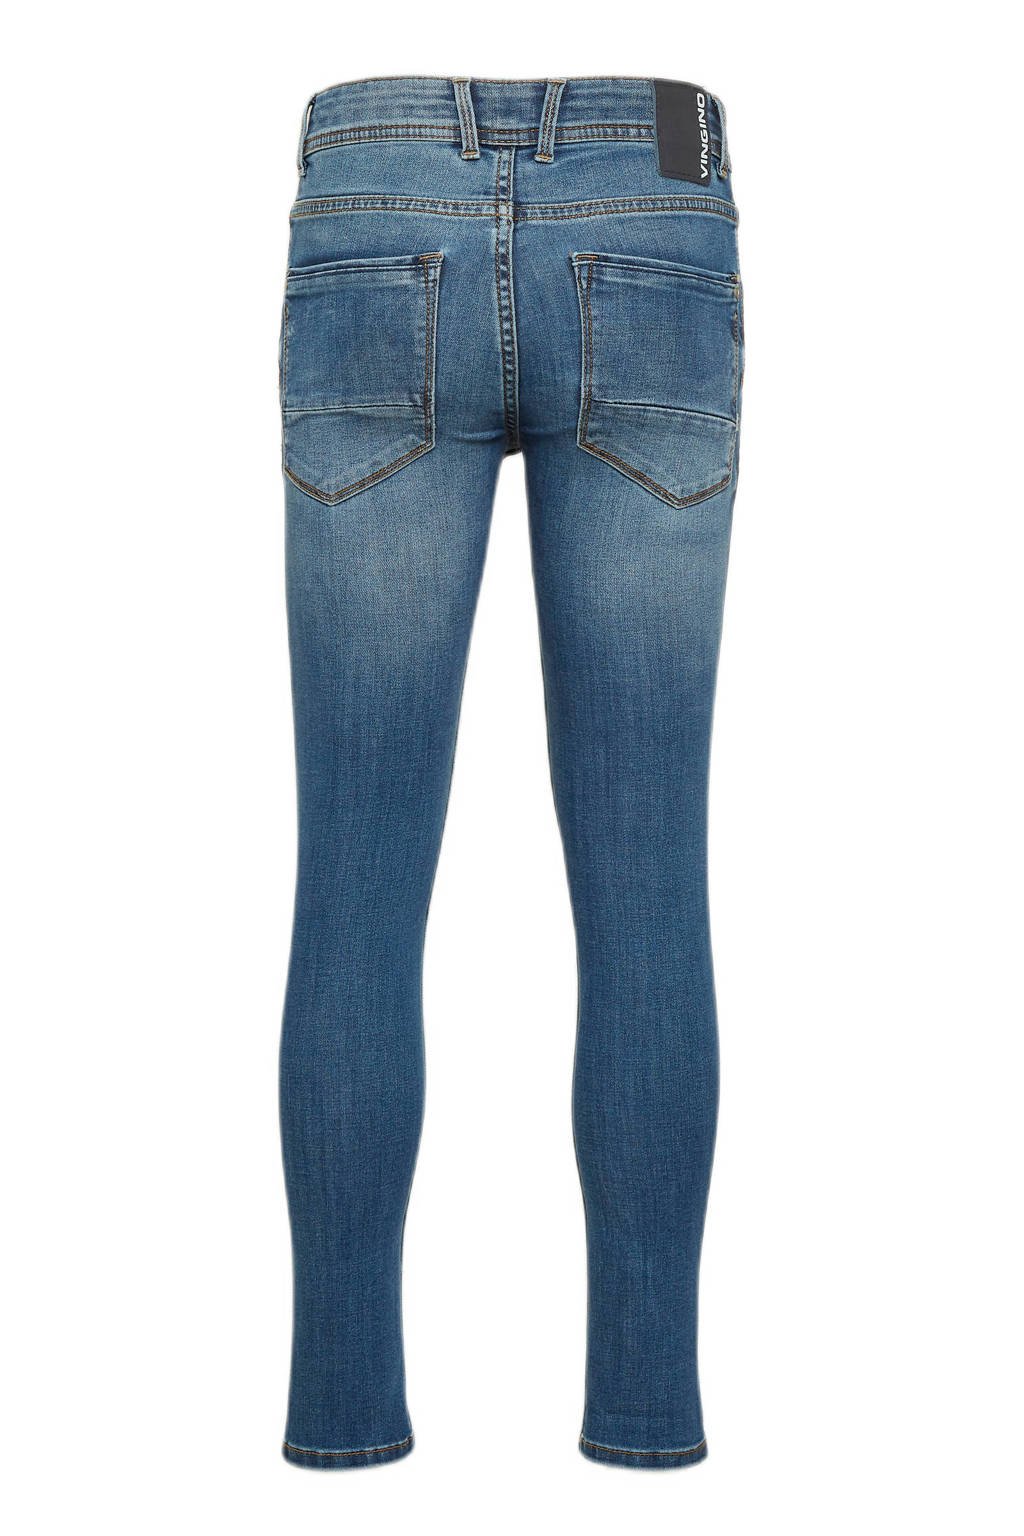 Vingino skinny jeans Anzio blue vintage